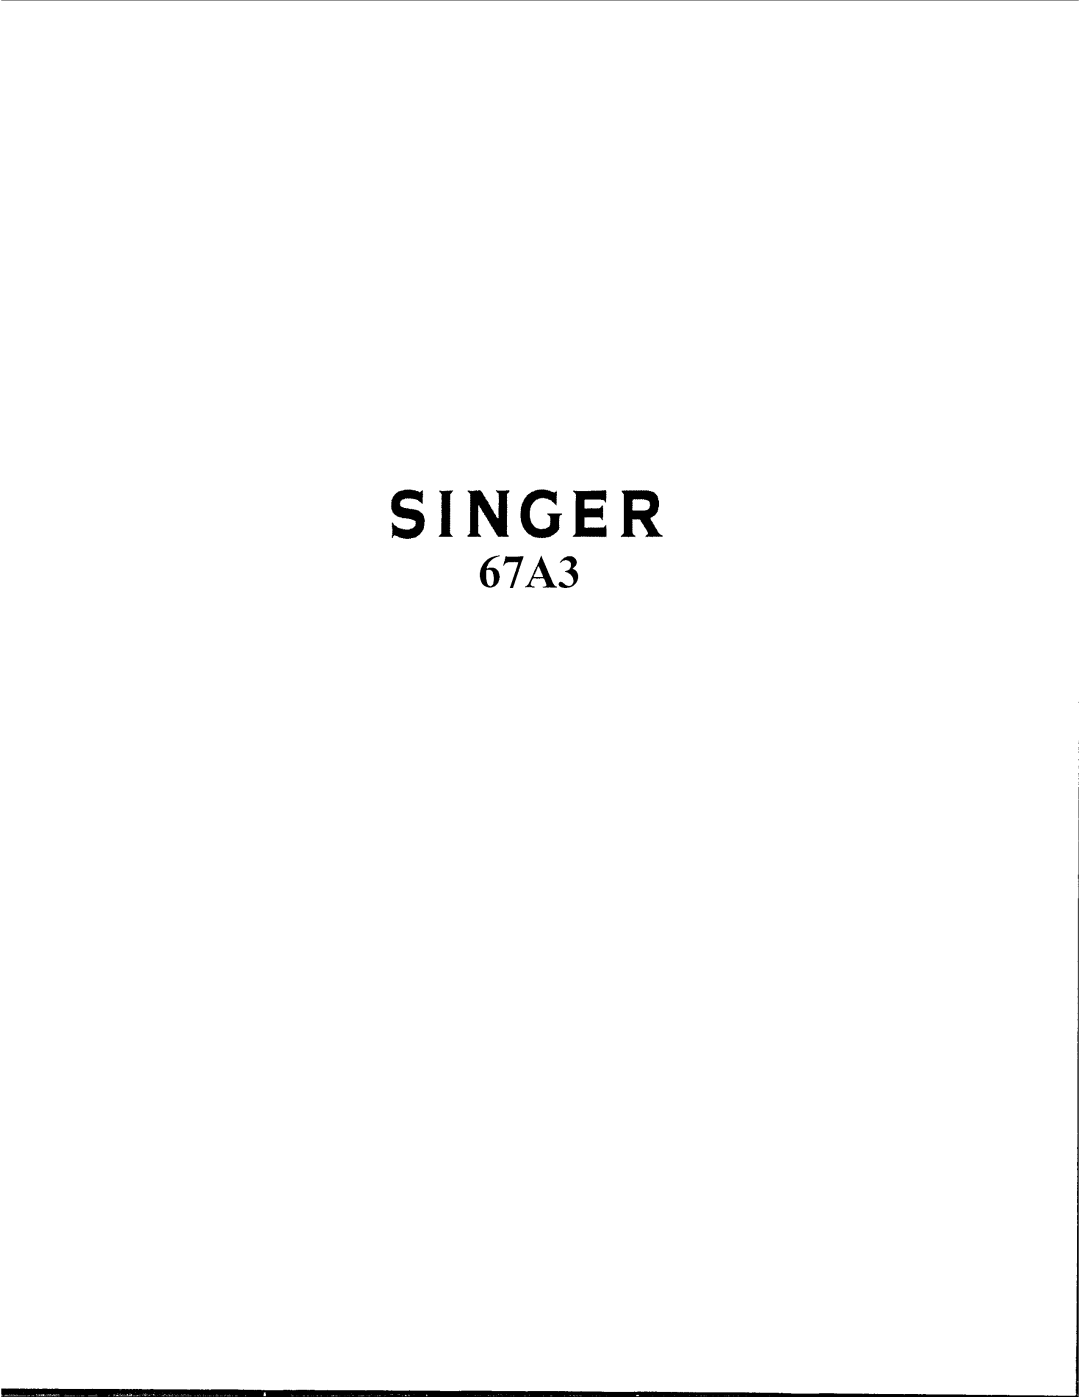 Singer 67A3 manual 